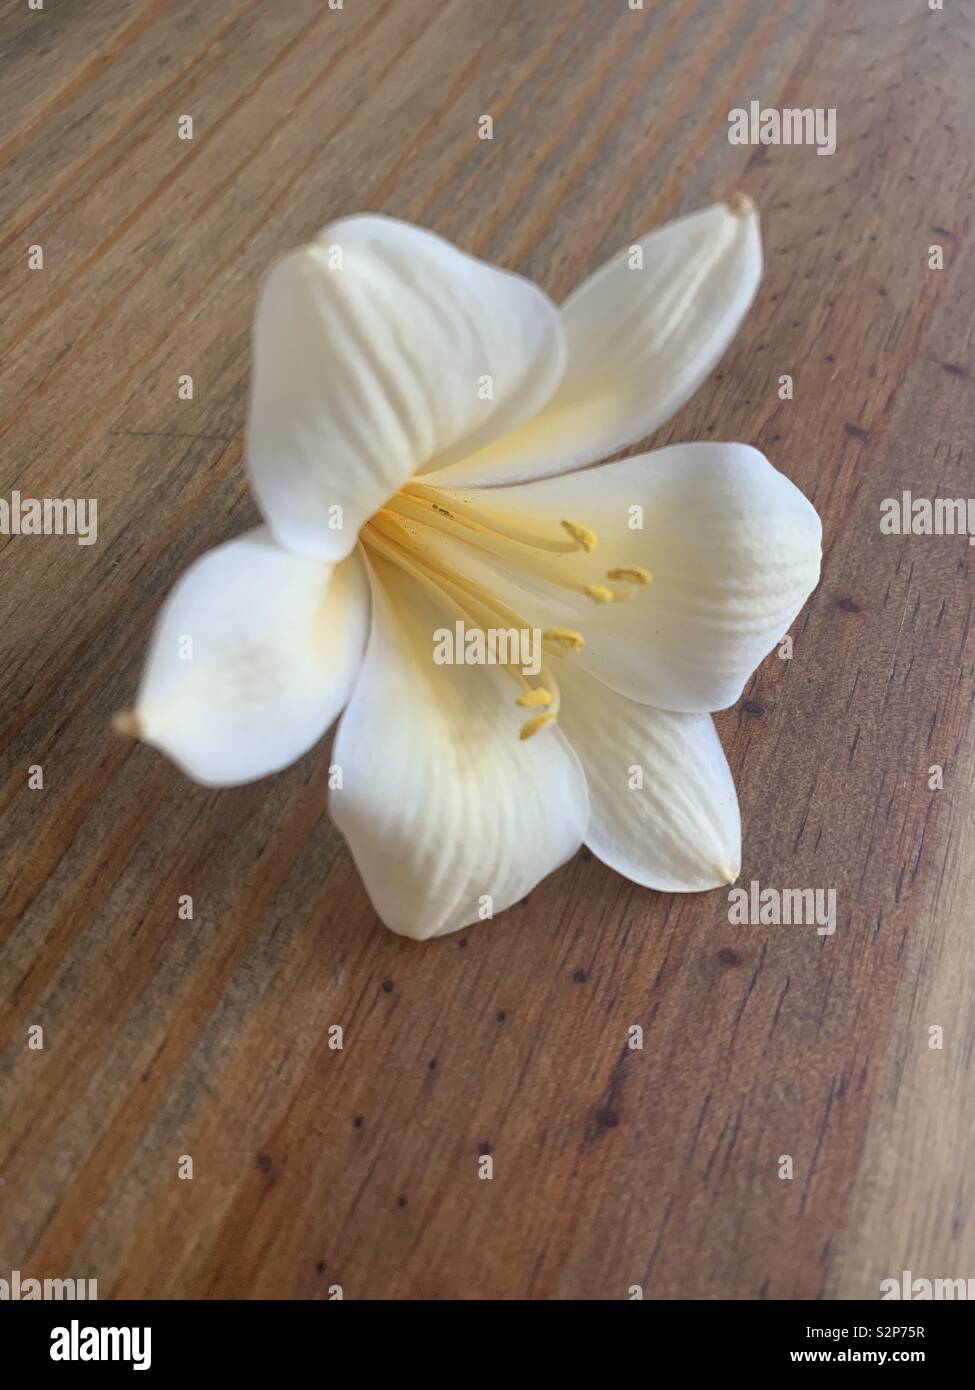 Flower on wood natural light Stock Photo